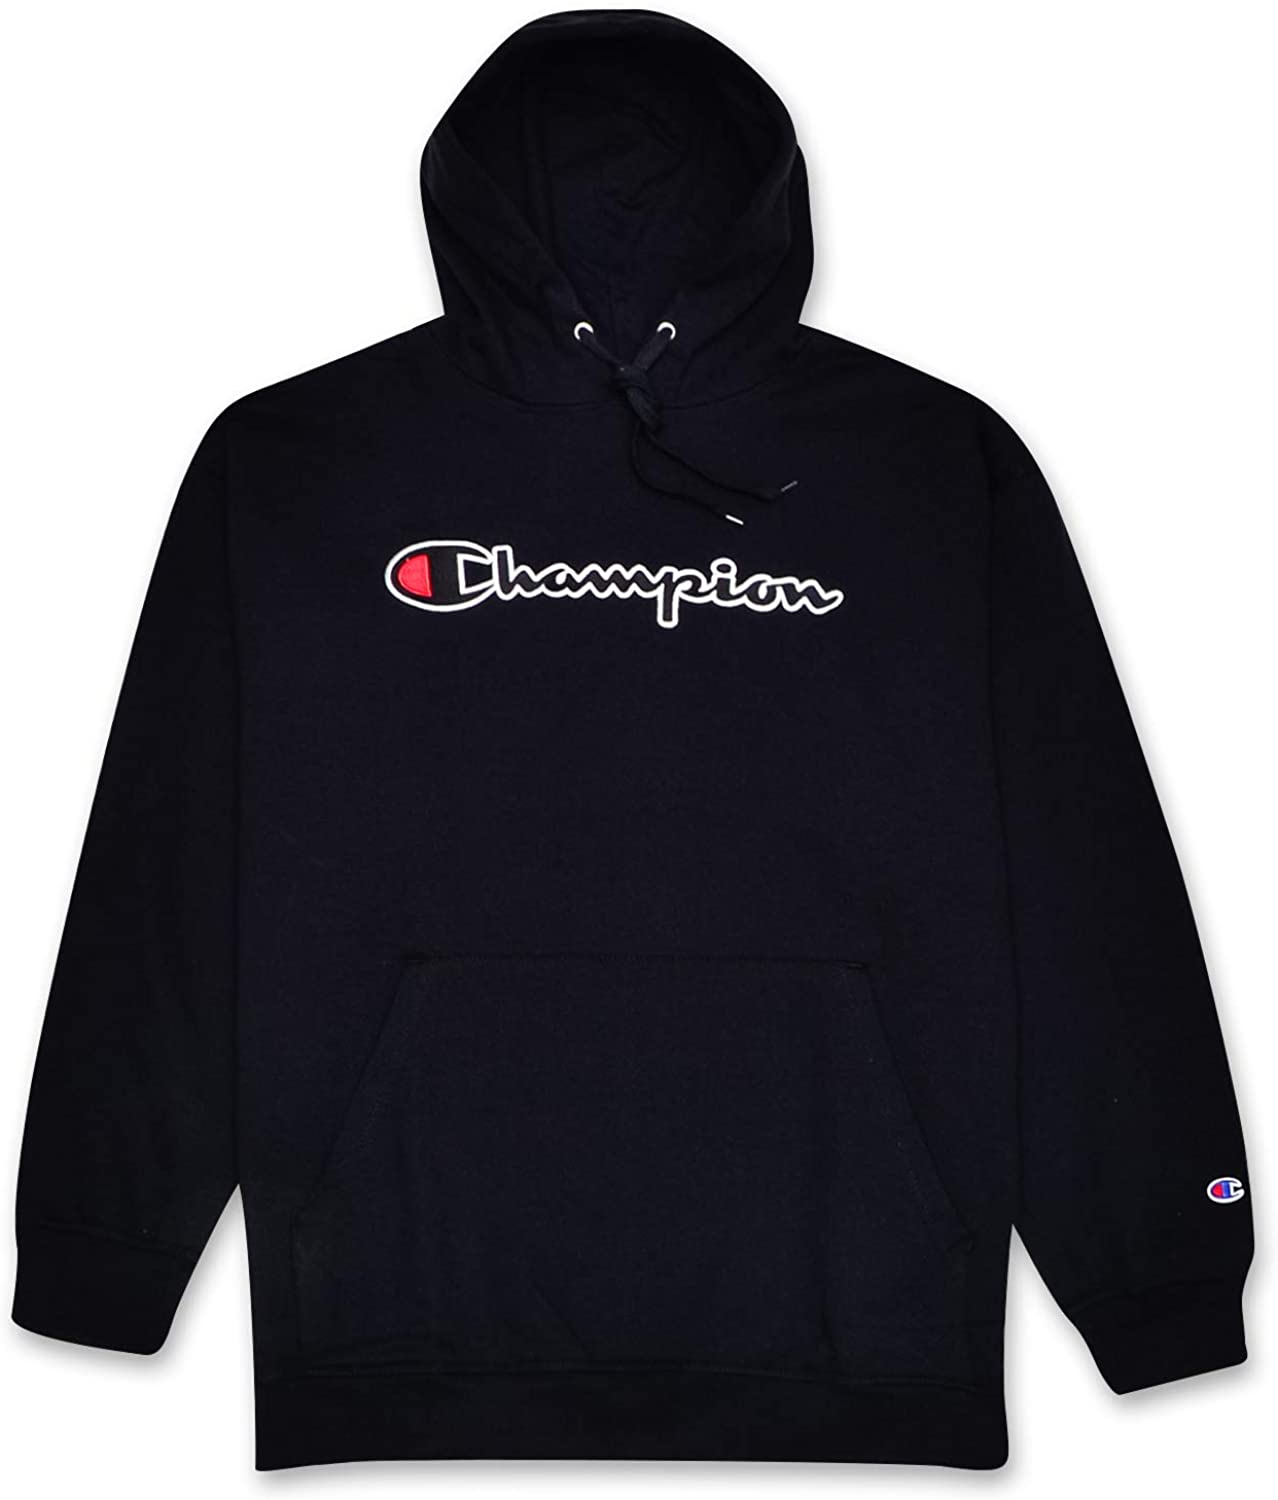 Champion Men Big Embroidered Pullover Champion Hoodies Sweatshirt | eBay